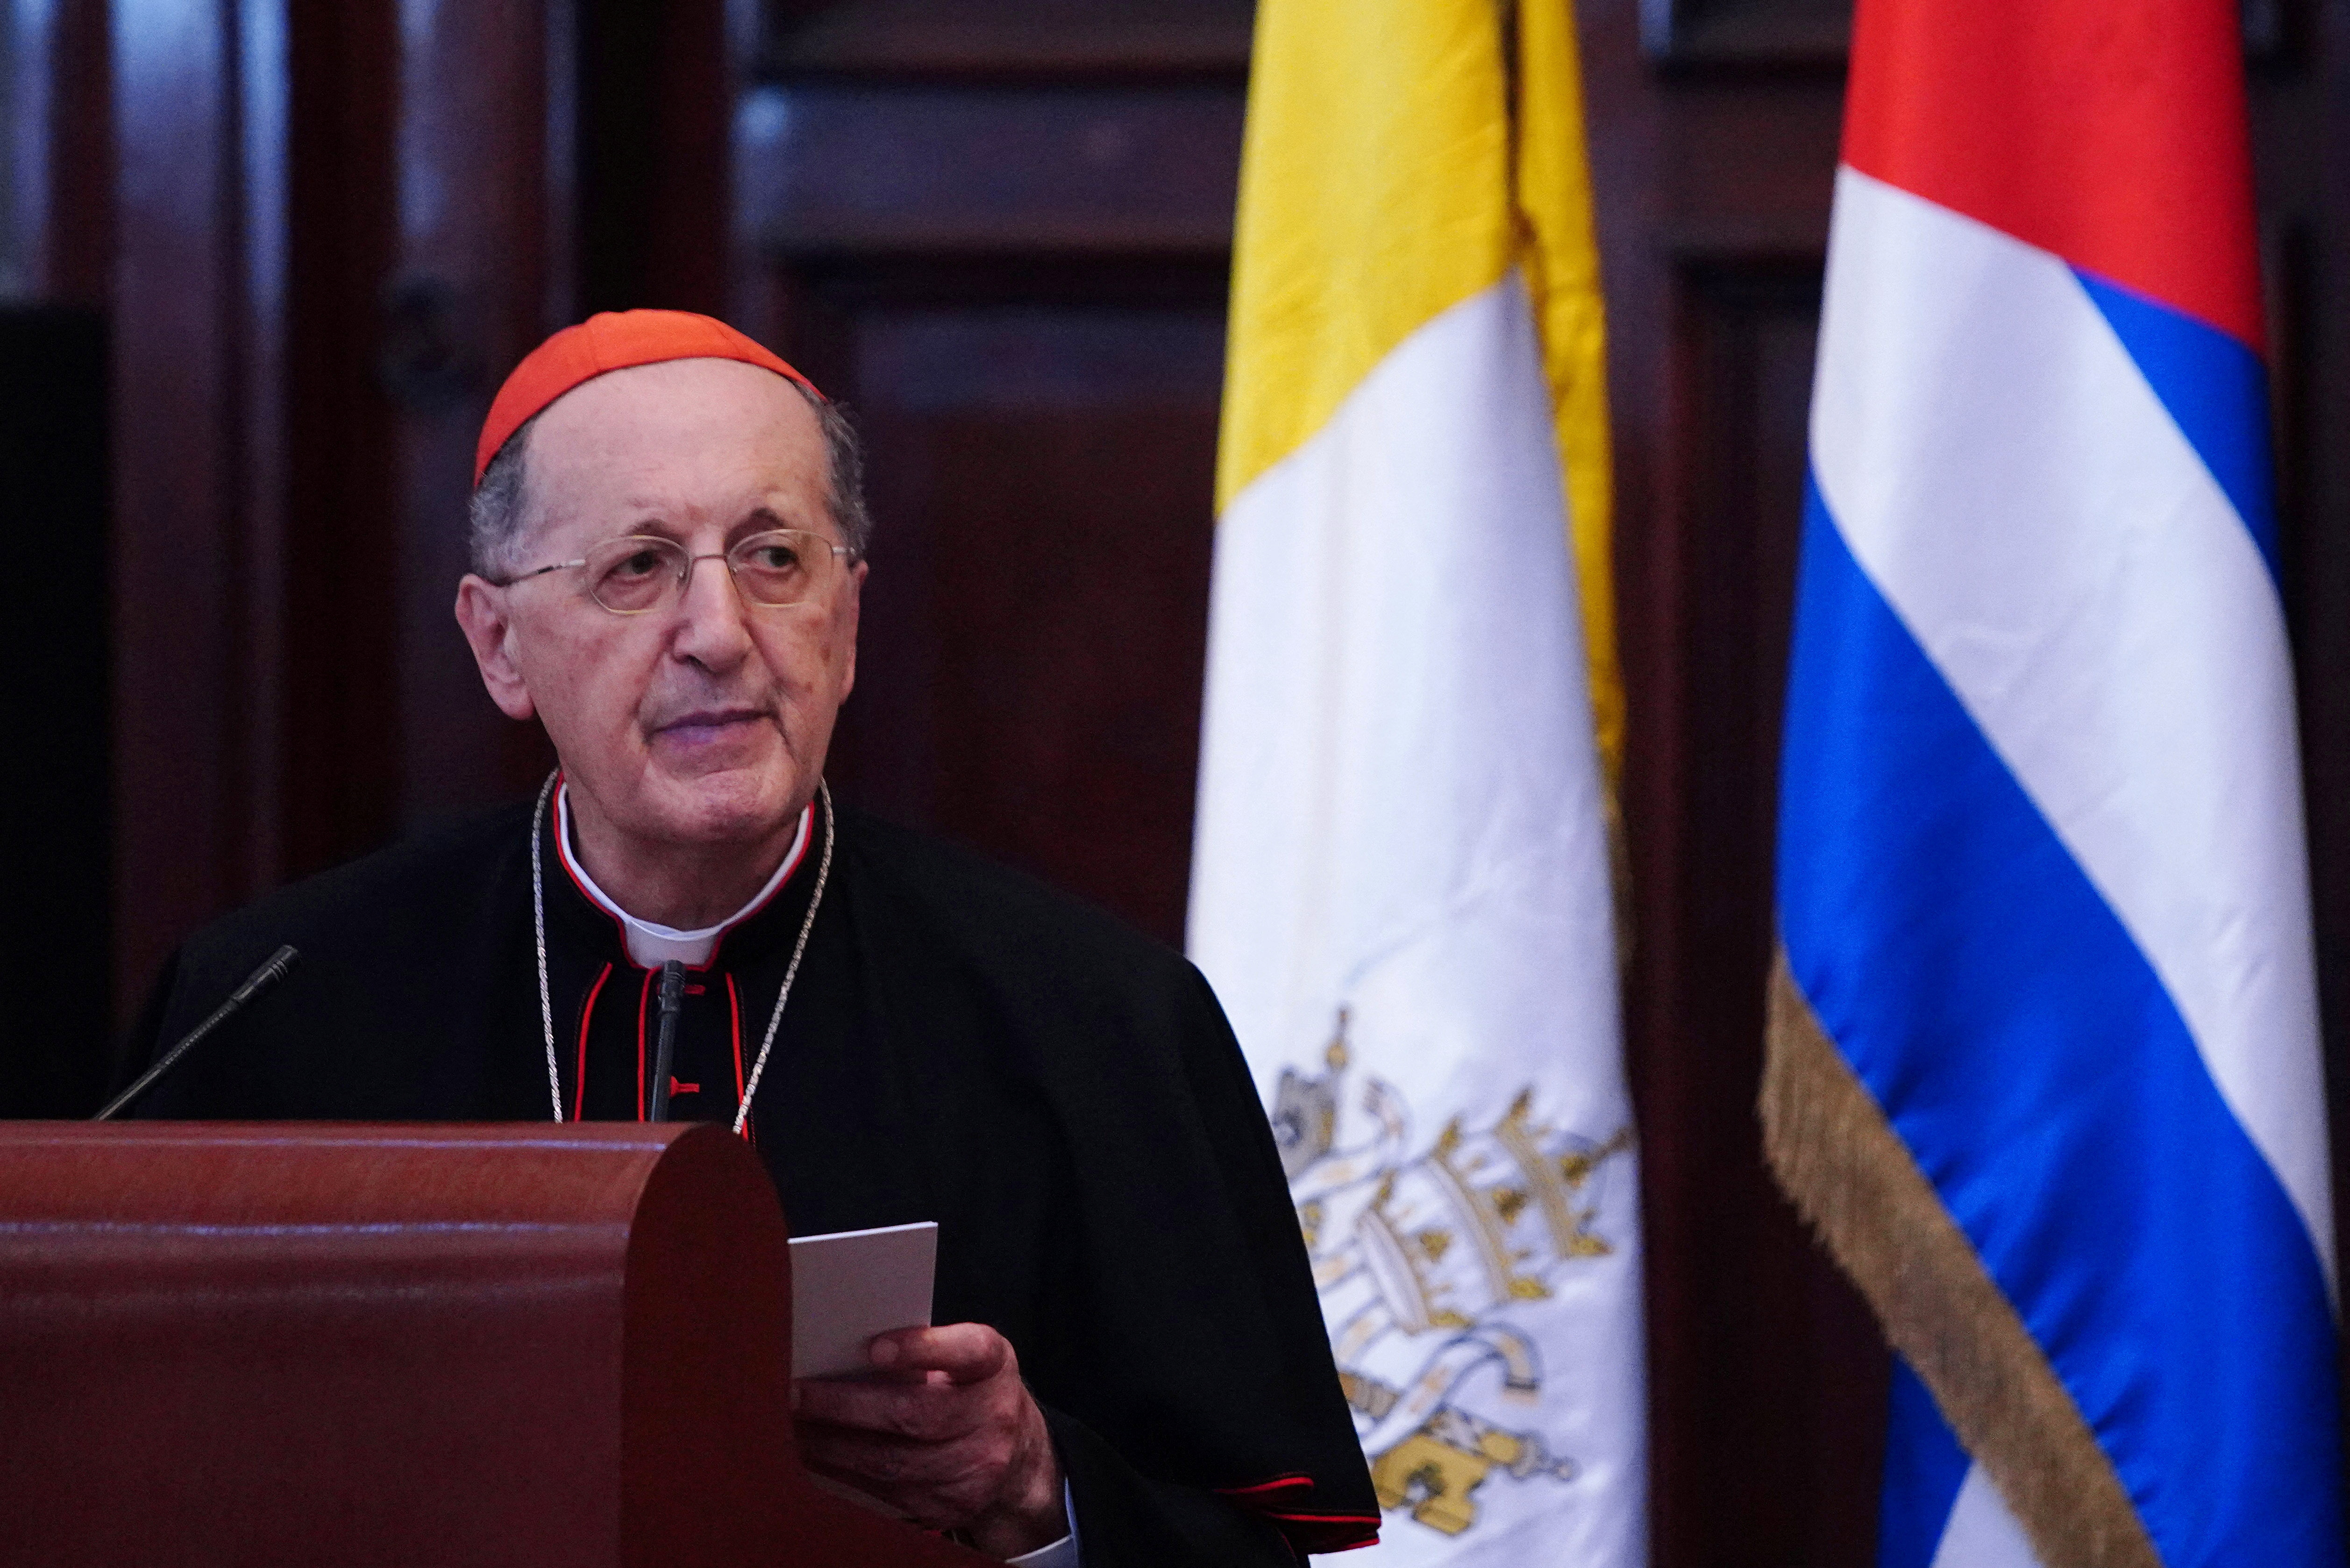 Papal envoy and cardinal Beniamino Stella in Havana